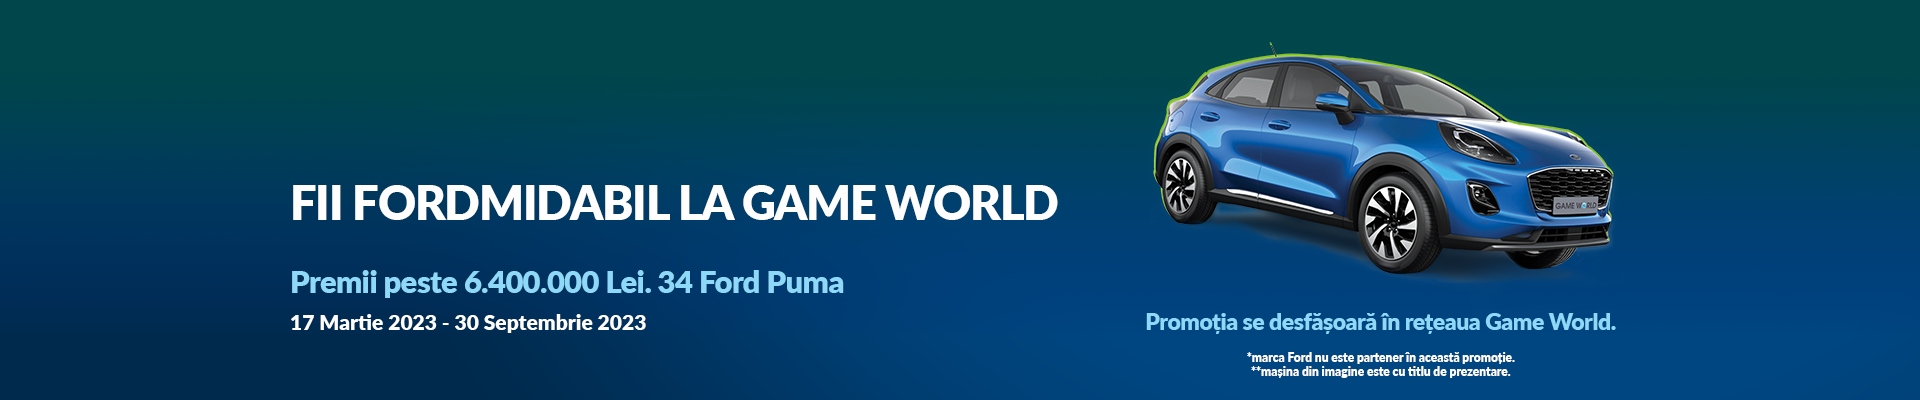 FII FORDMIDABIL LA GAME WORLD ALBA IULIA